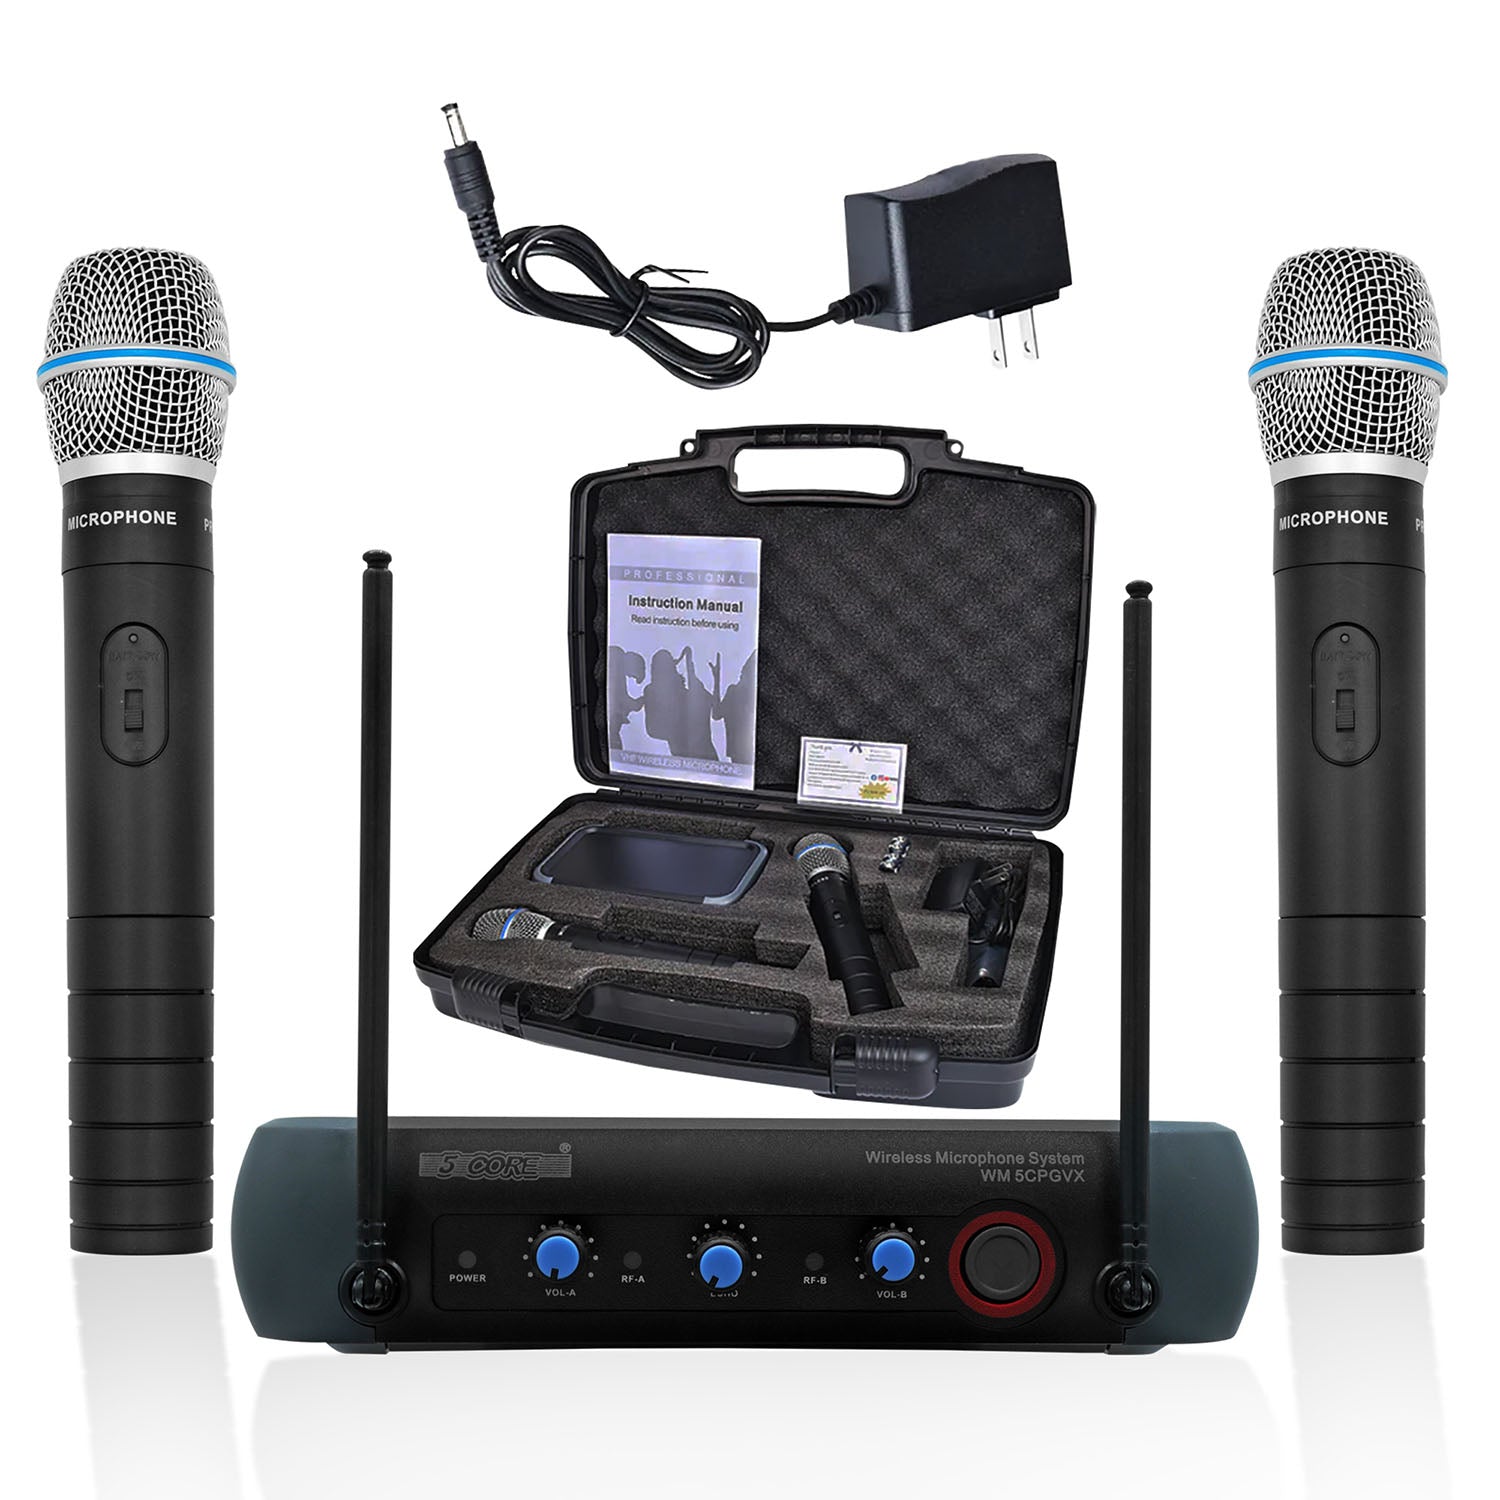 5Core Professional Wireless Microphone VHF Fixed Frequency Microfono Inalambrico 200FT Range 2 Handheld Mics